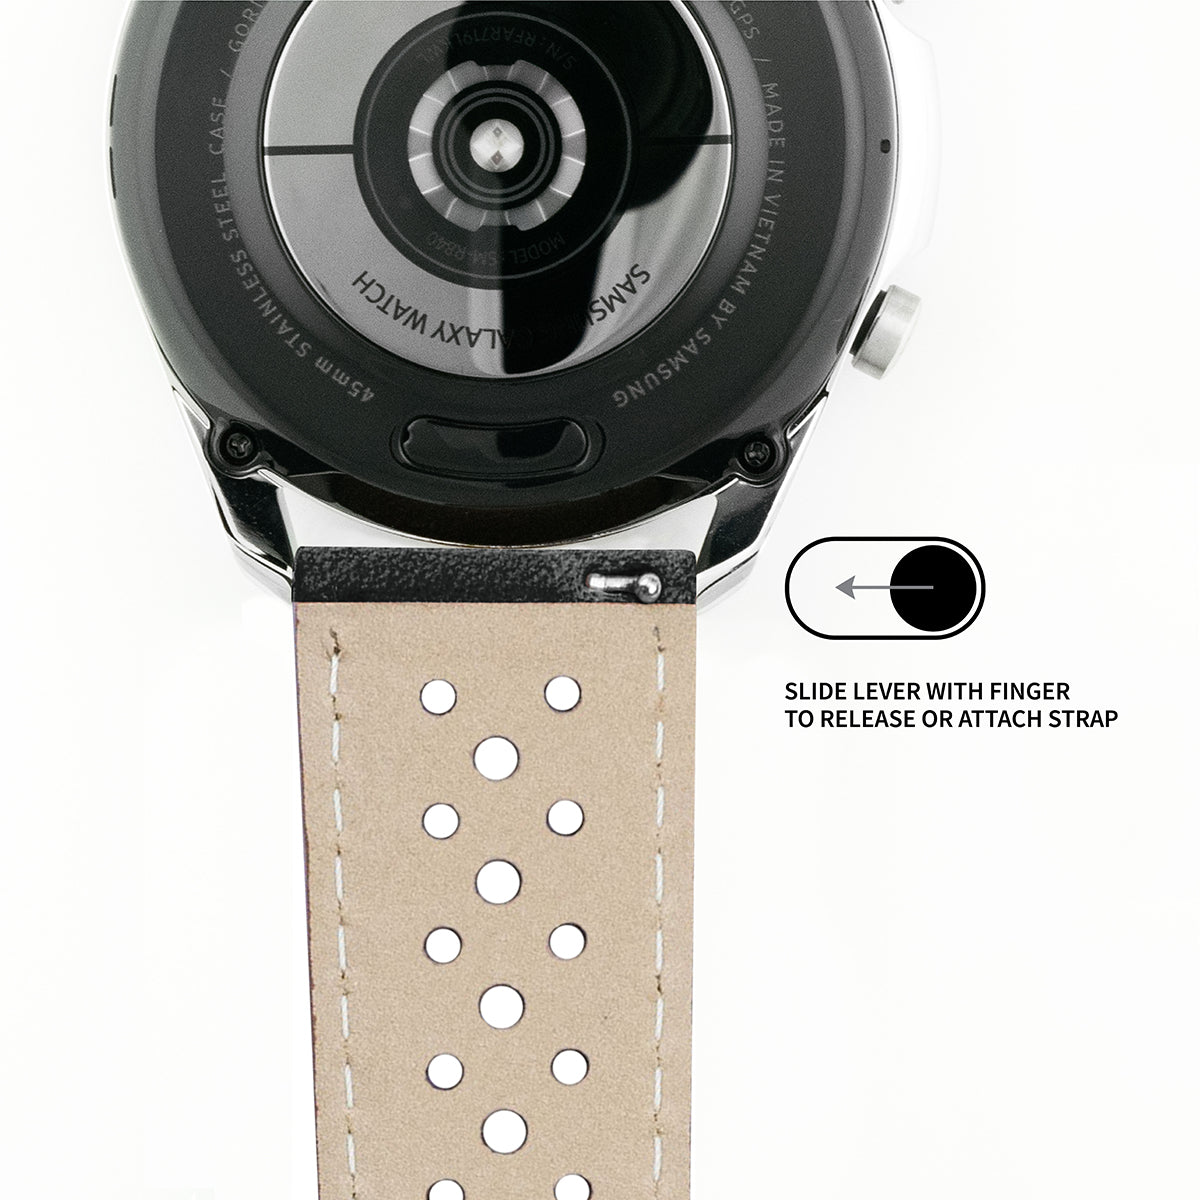 Samsung Galaxy Watch5 Racing Horween Leather Navy Blue Linen Stitch Watch Band